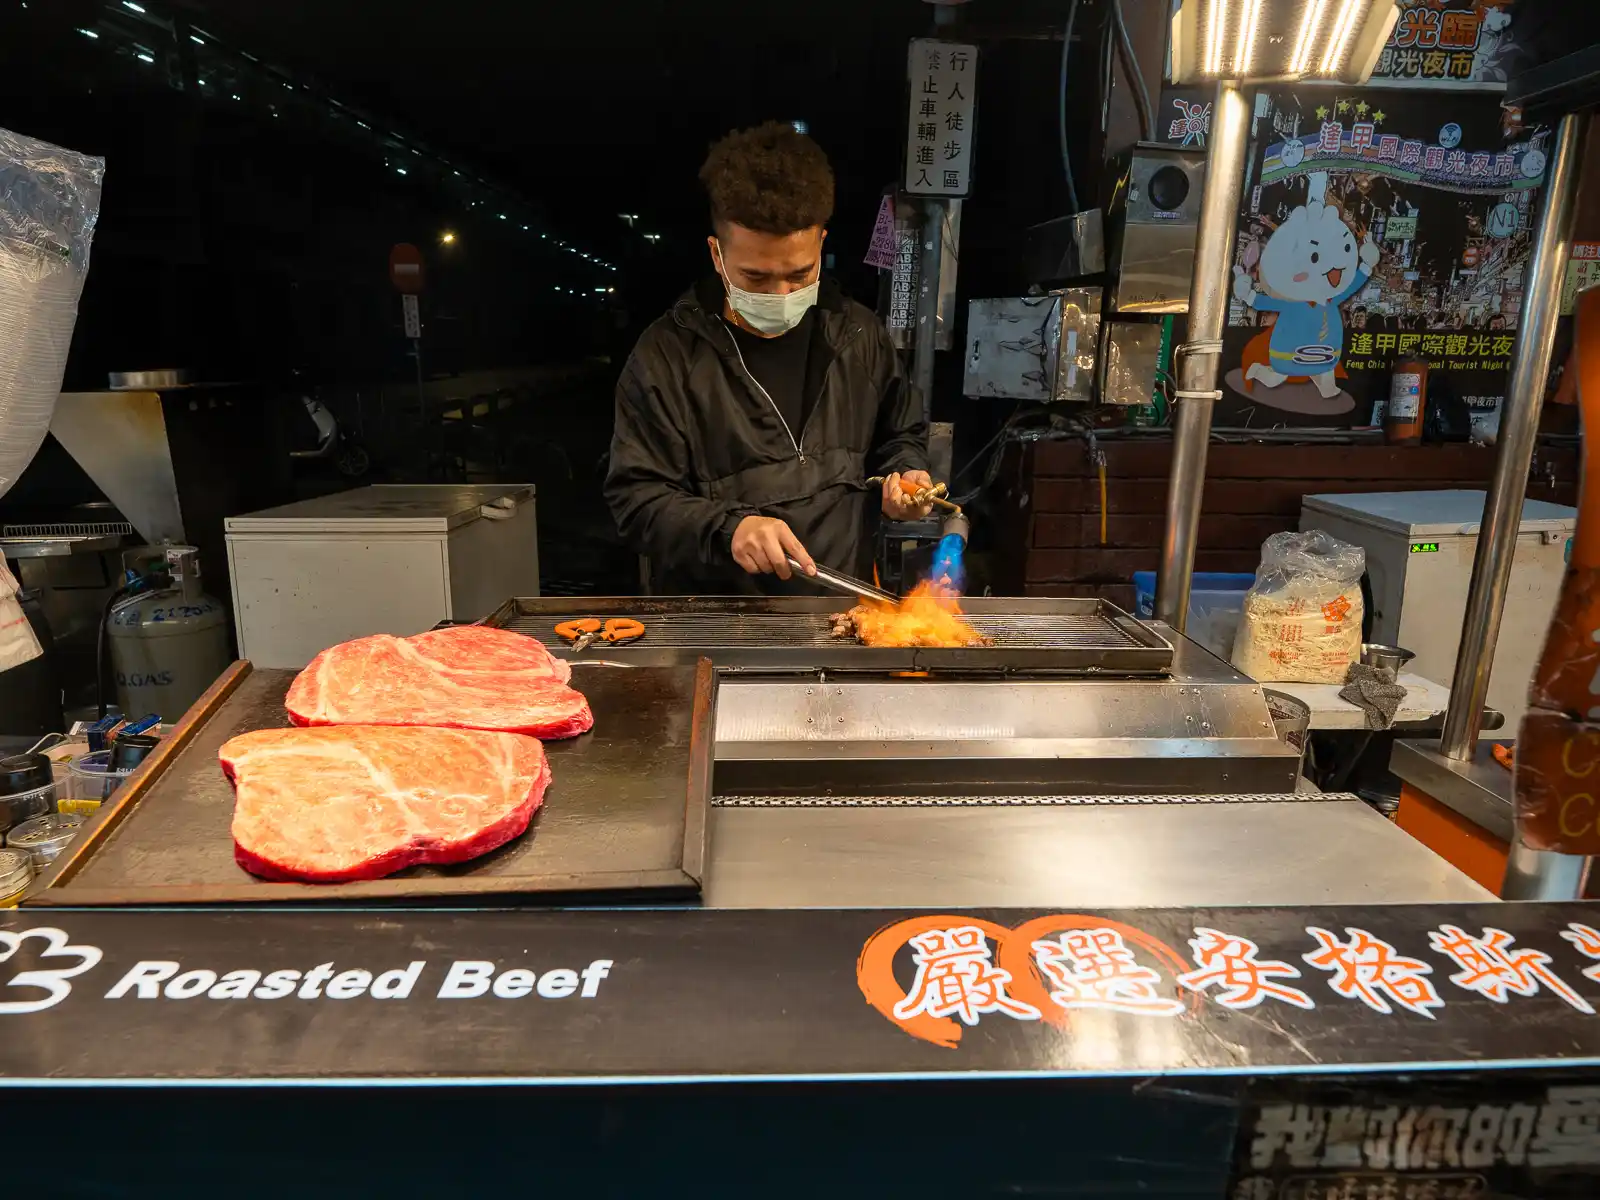 A night market vendor prepares a beef steak.